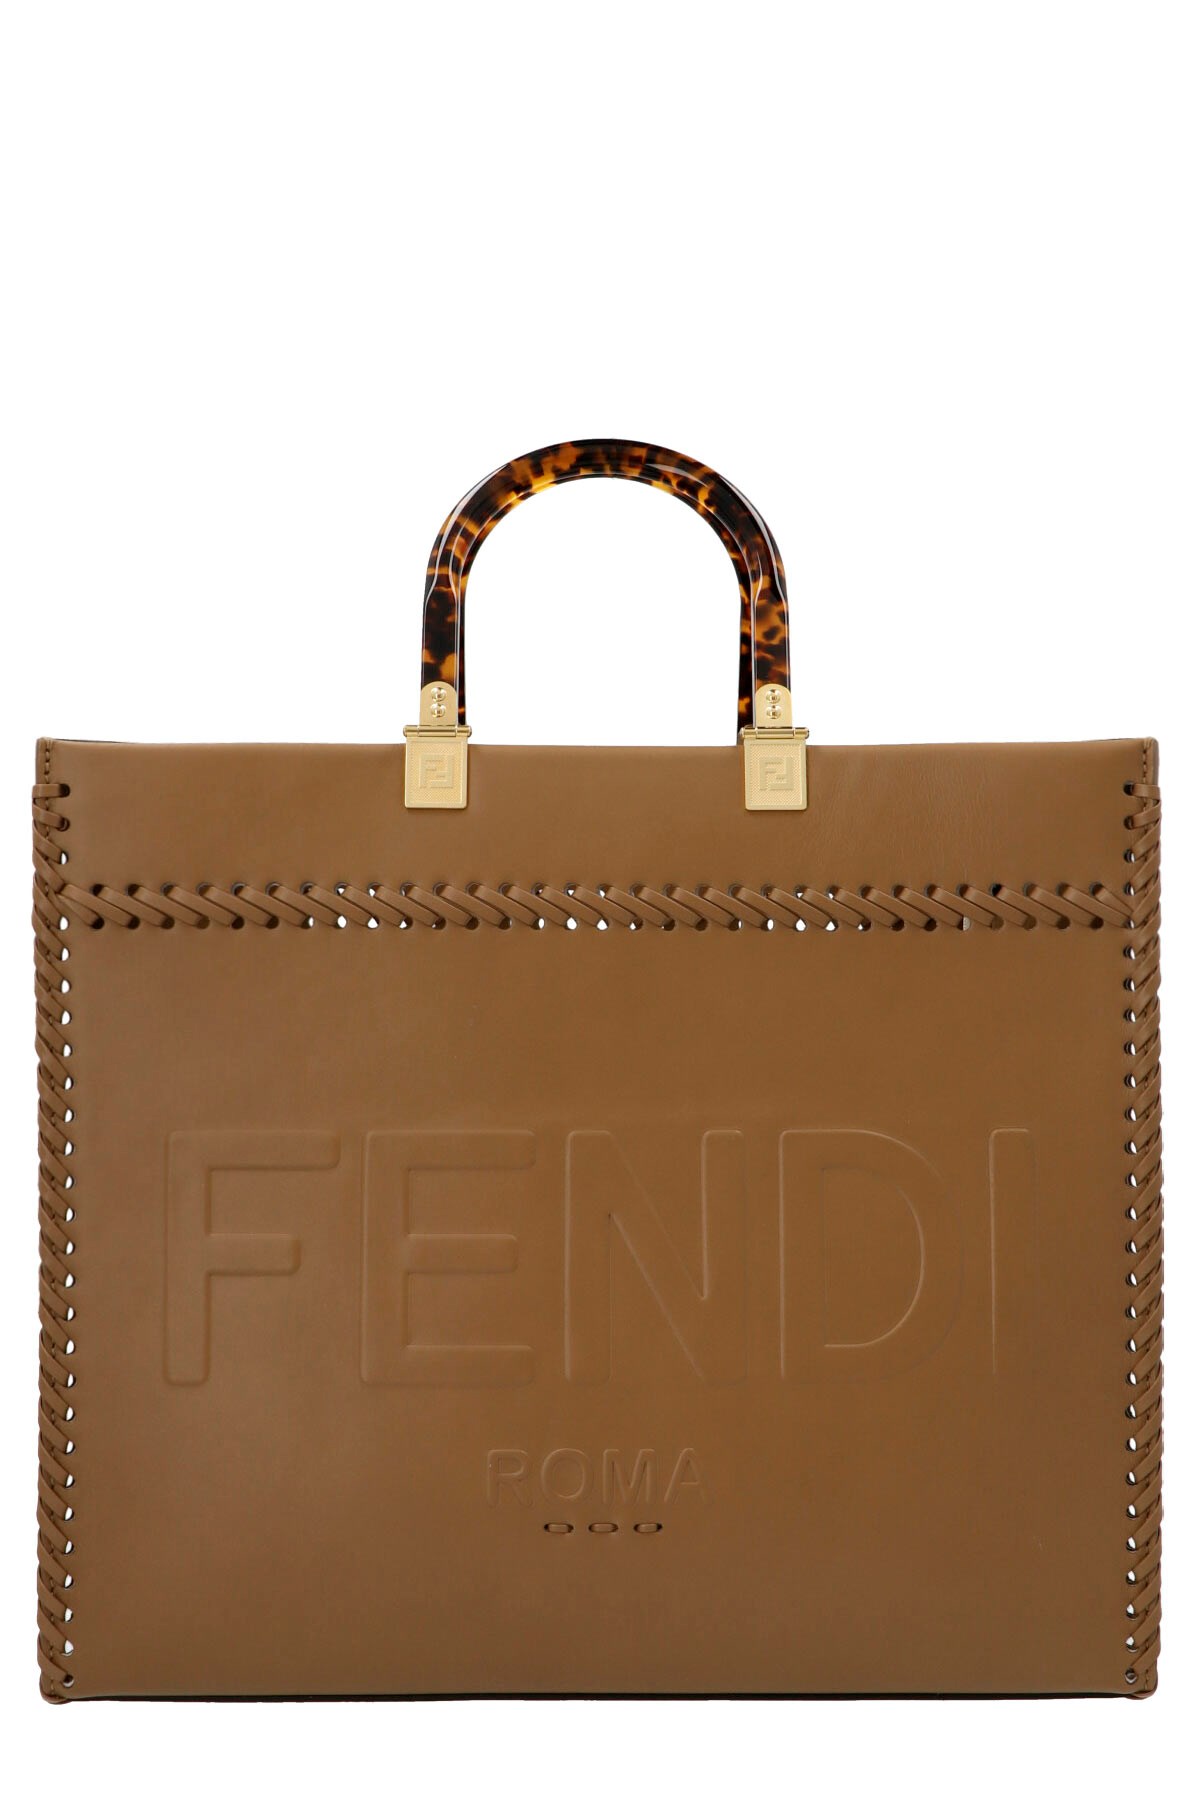 FENDI 'Fendi Sunshine’ Shopping Bag